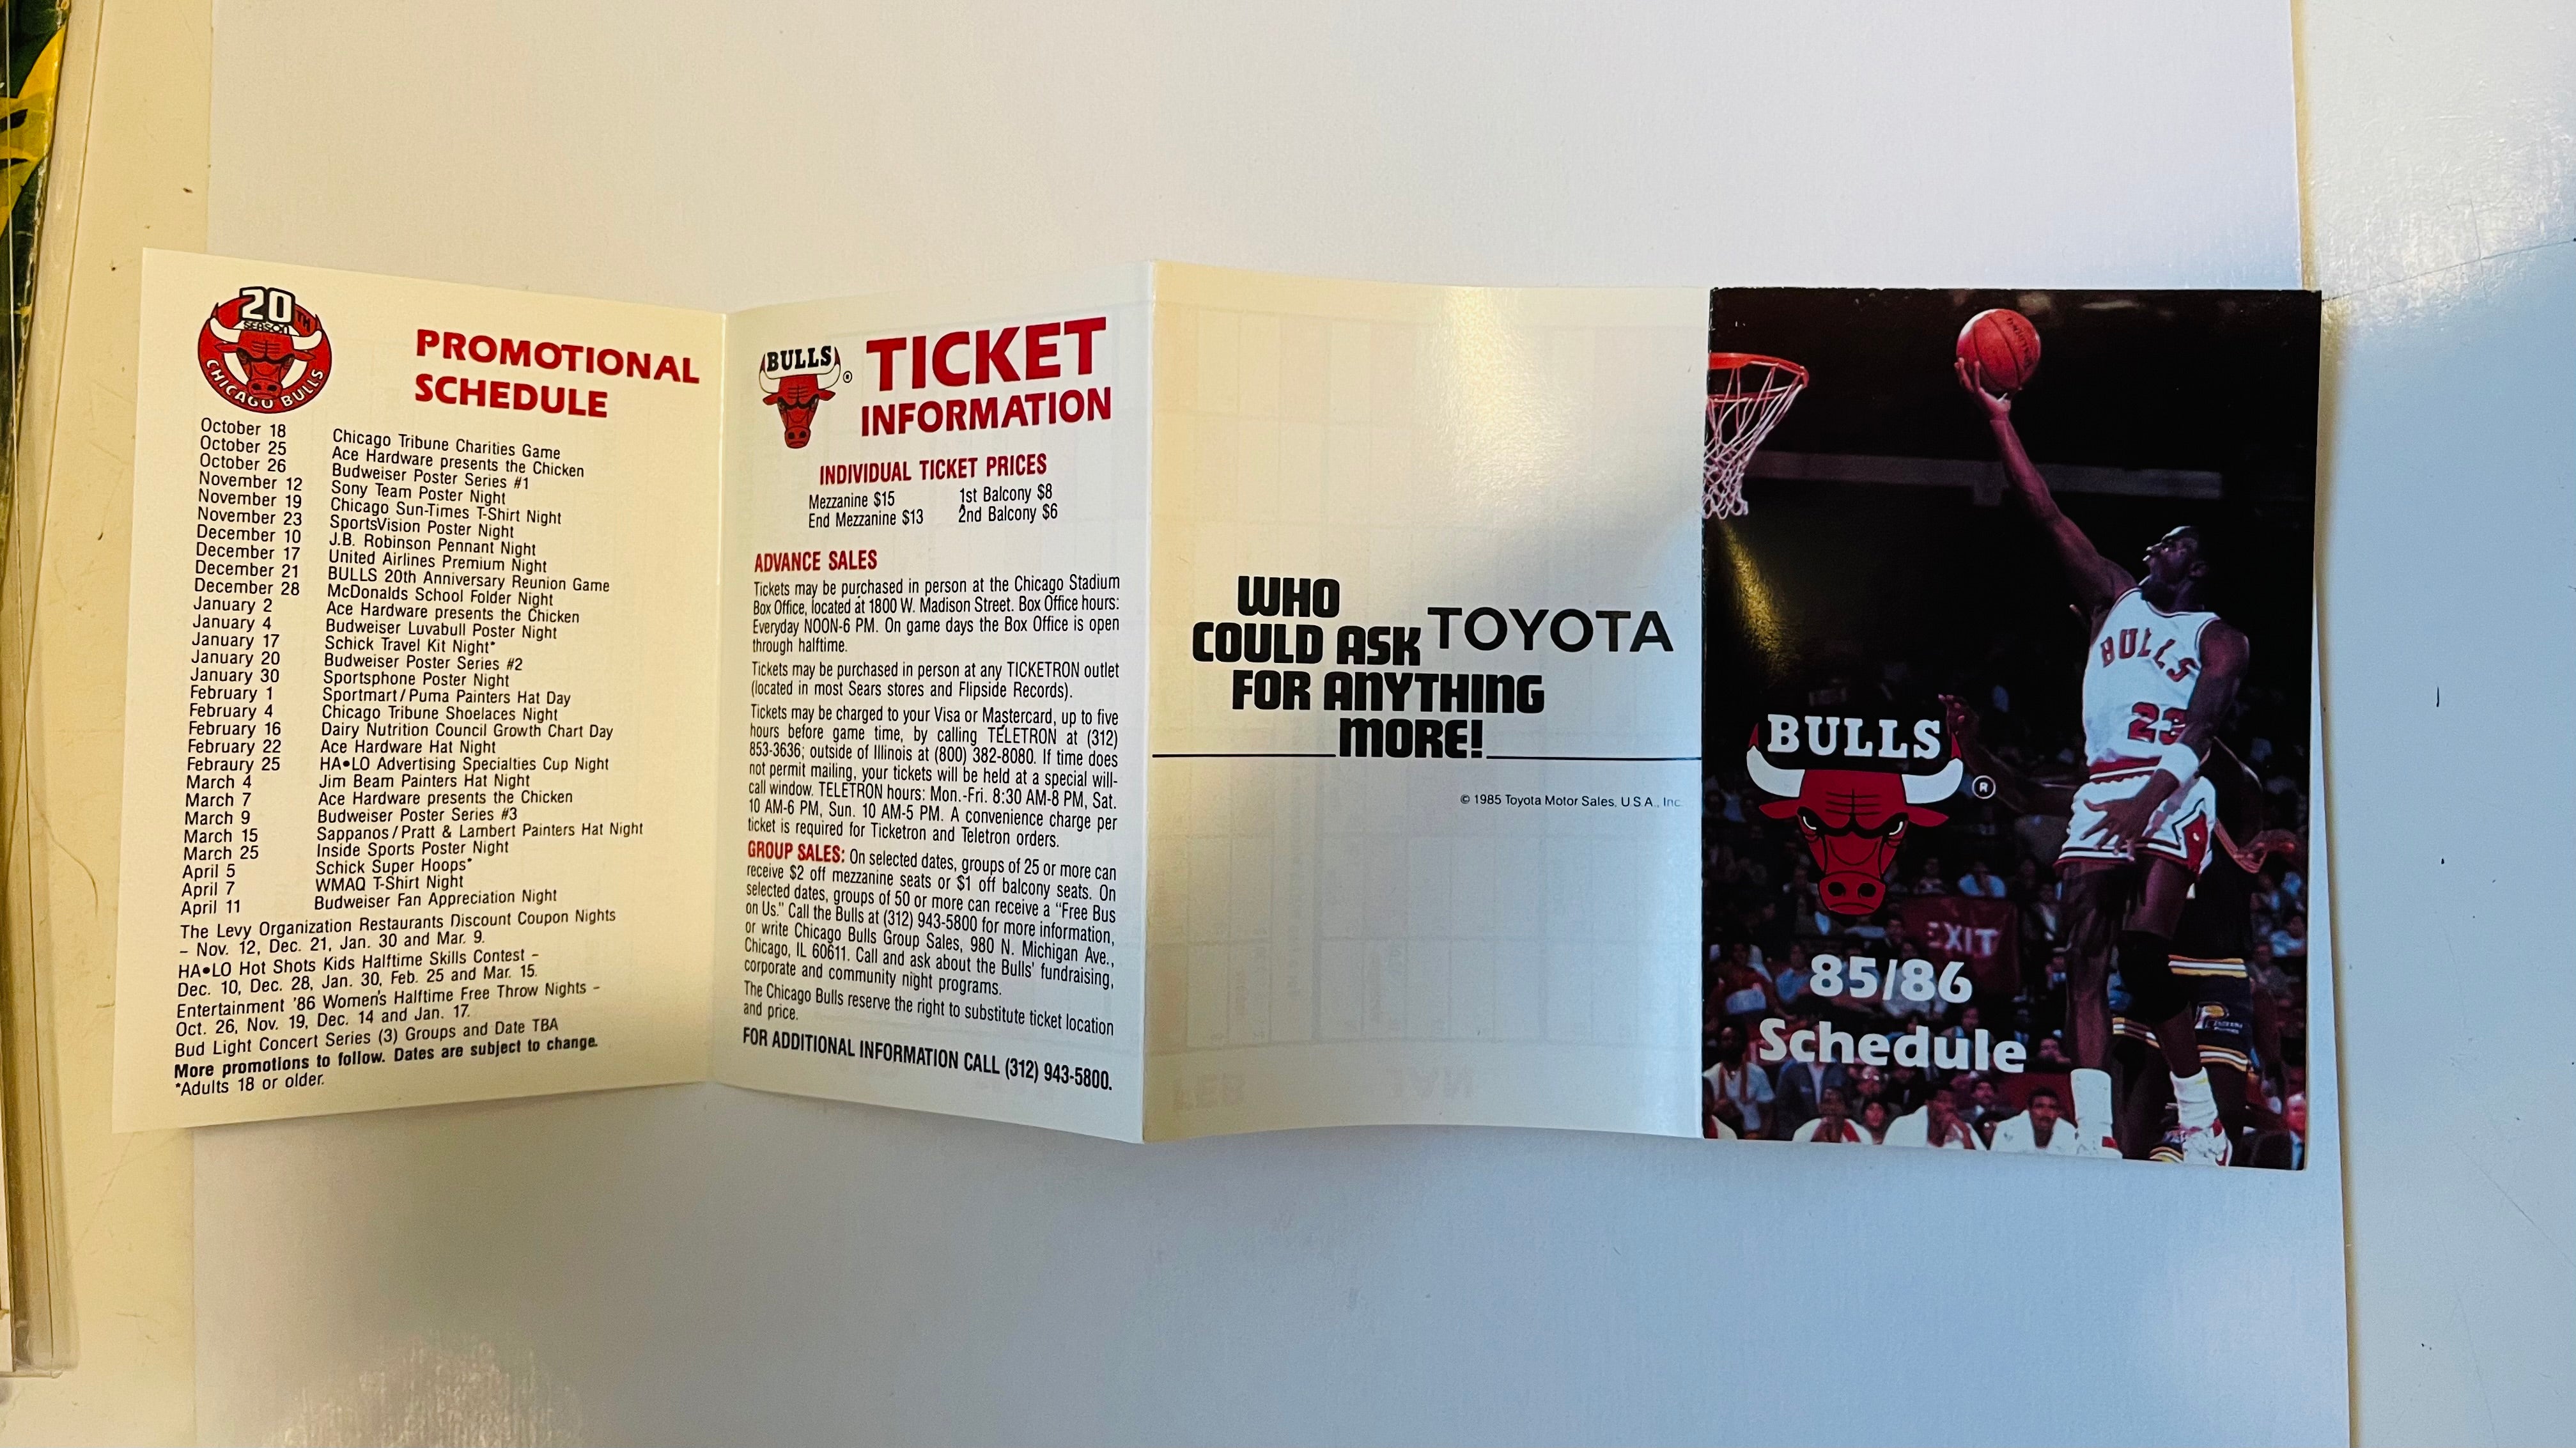 Michael Jordan Chicago Bulls rare basketball schedule 1985-86